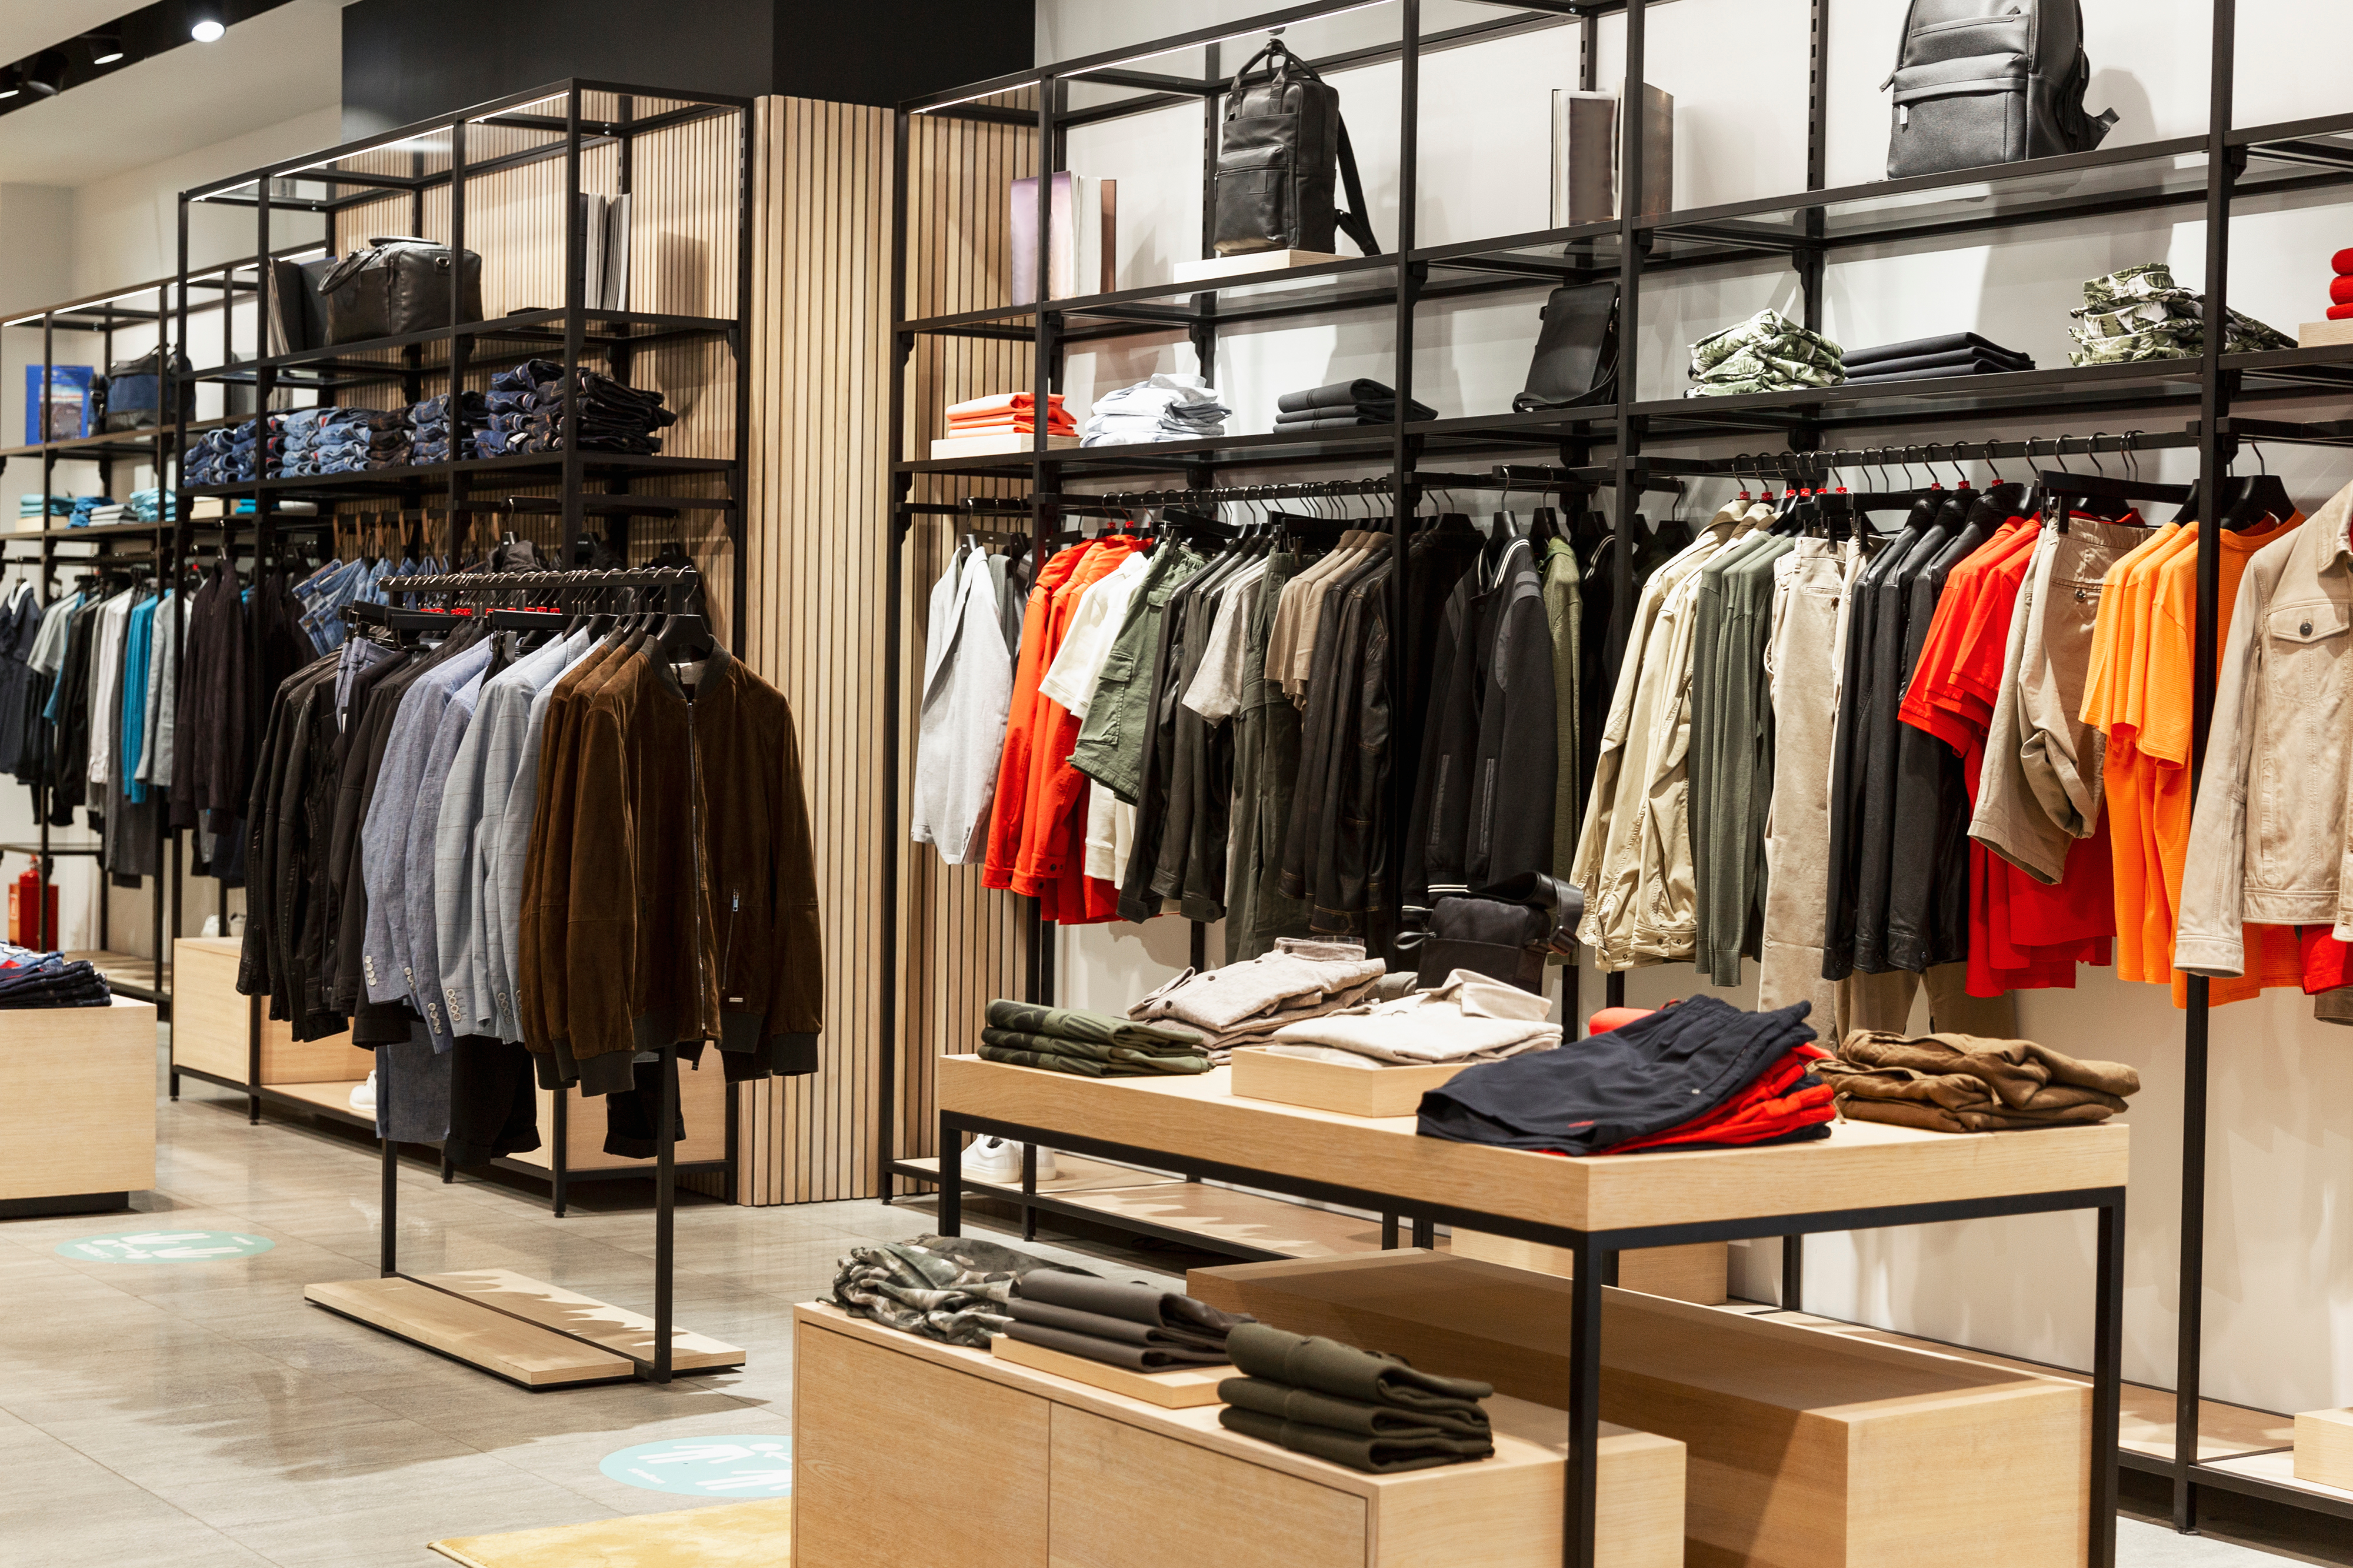 Interior de una tienda de ropa masculina. | Fuente: Shutterstock